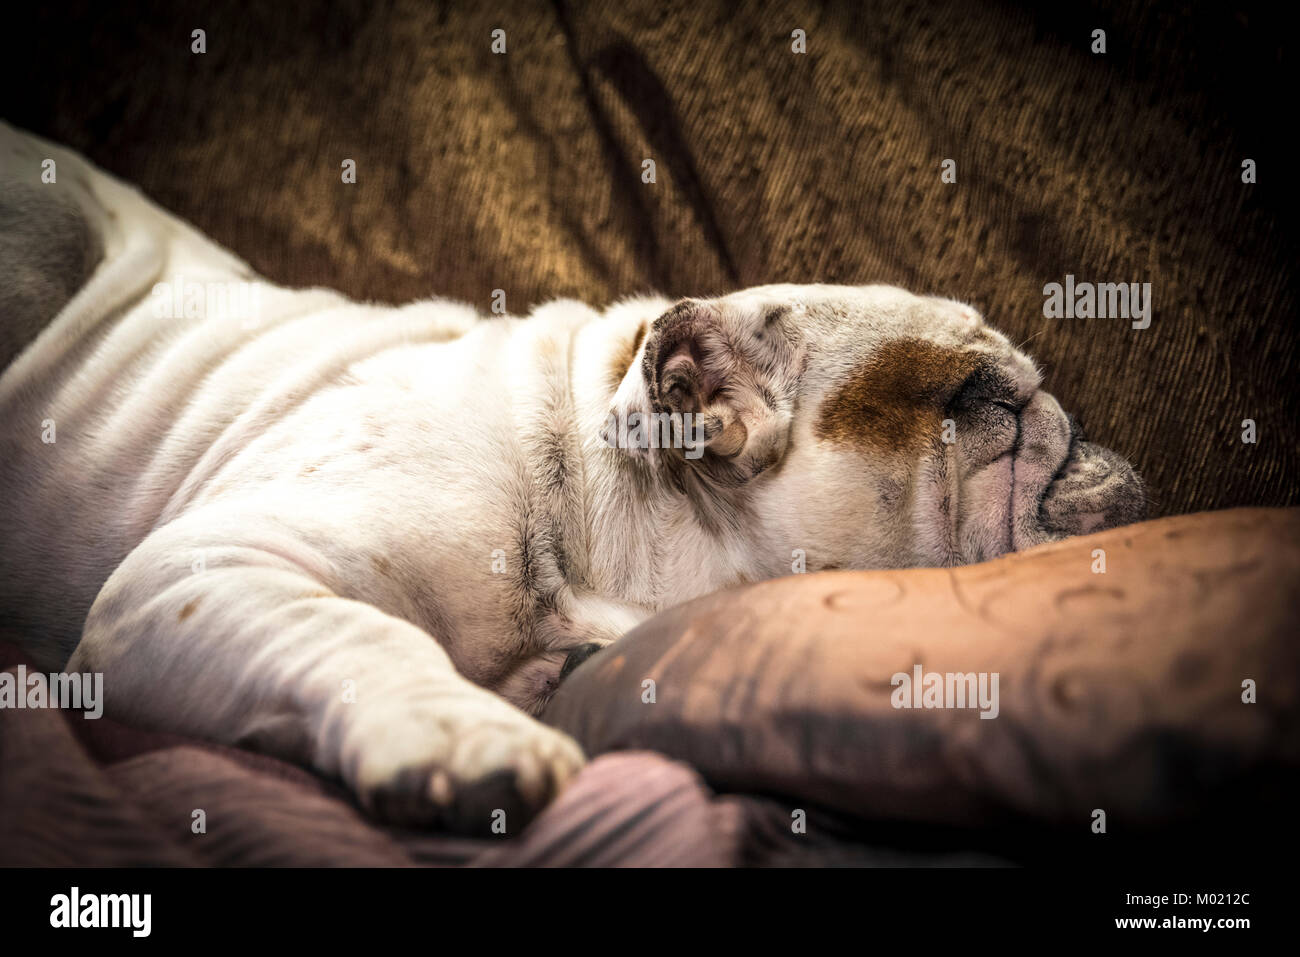 English bulldog dog sleeping on the sofa with its wrinkles characteristics Stock Photo